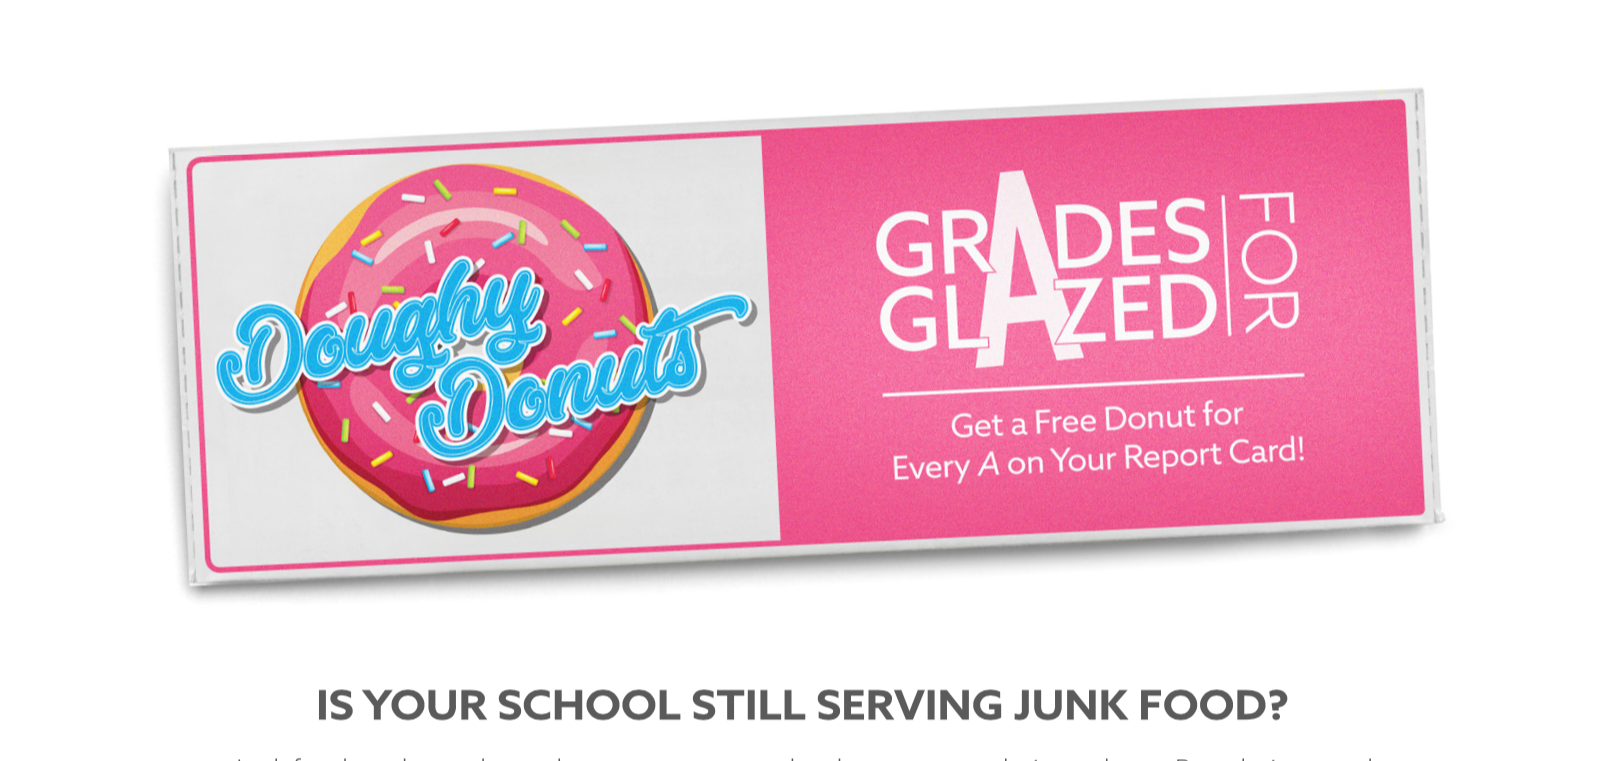 Junk Food Marketing in Schools